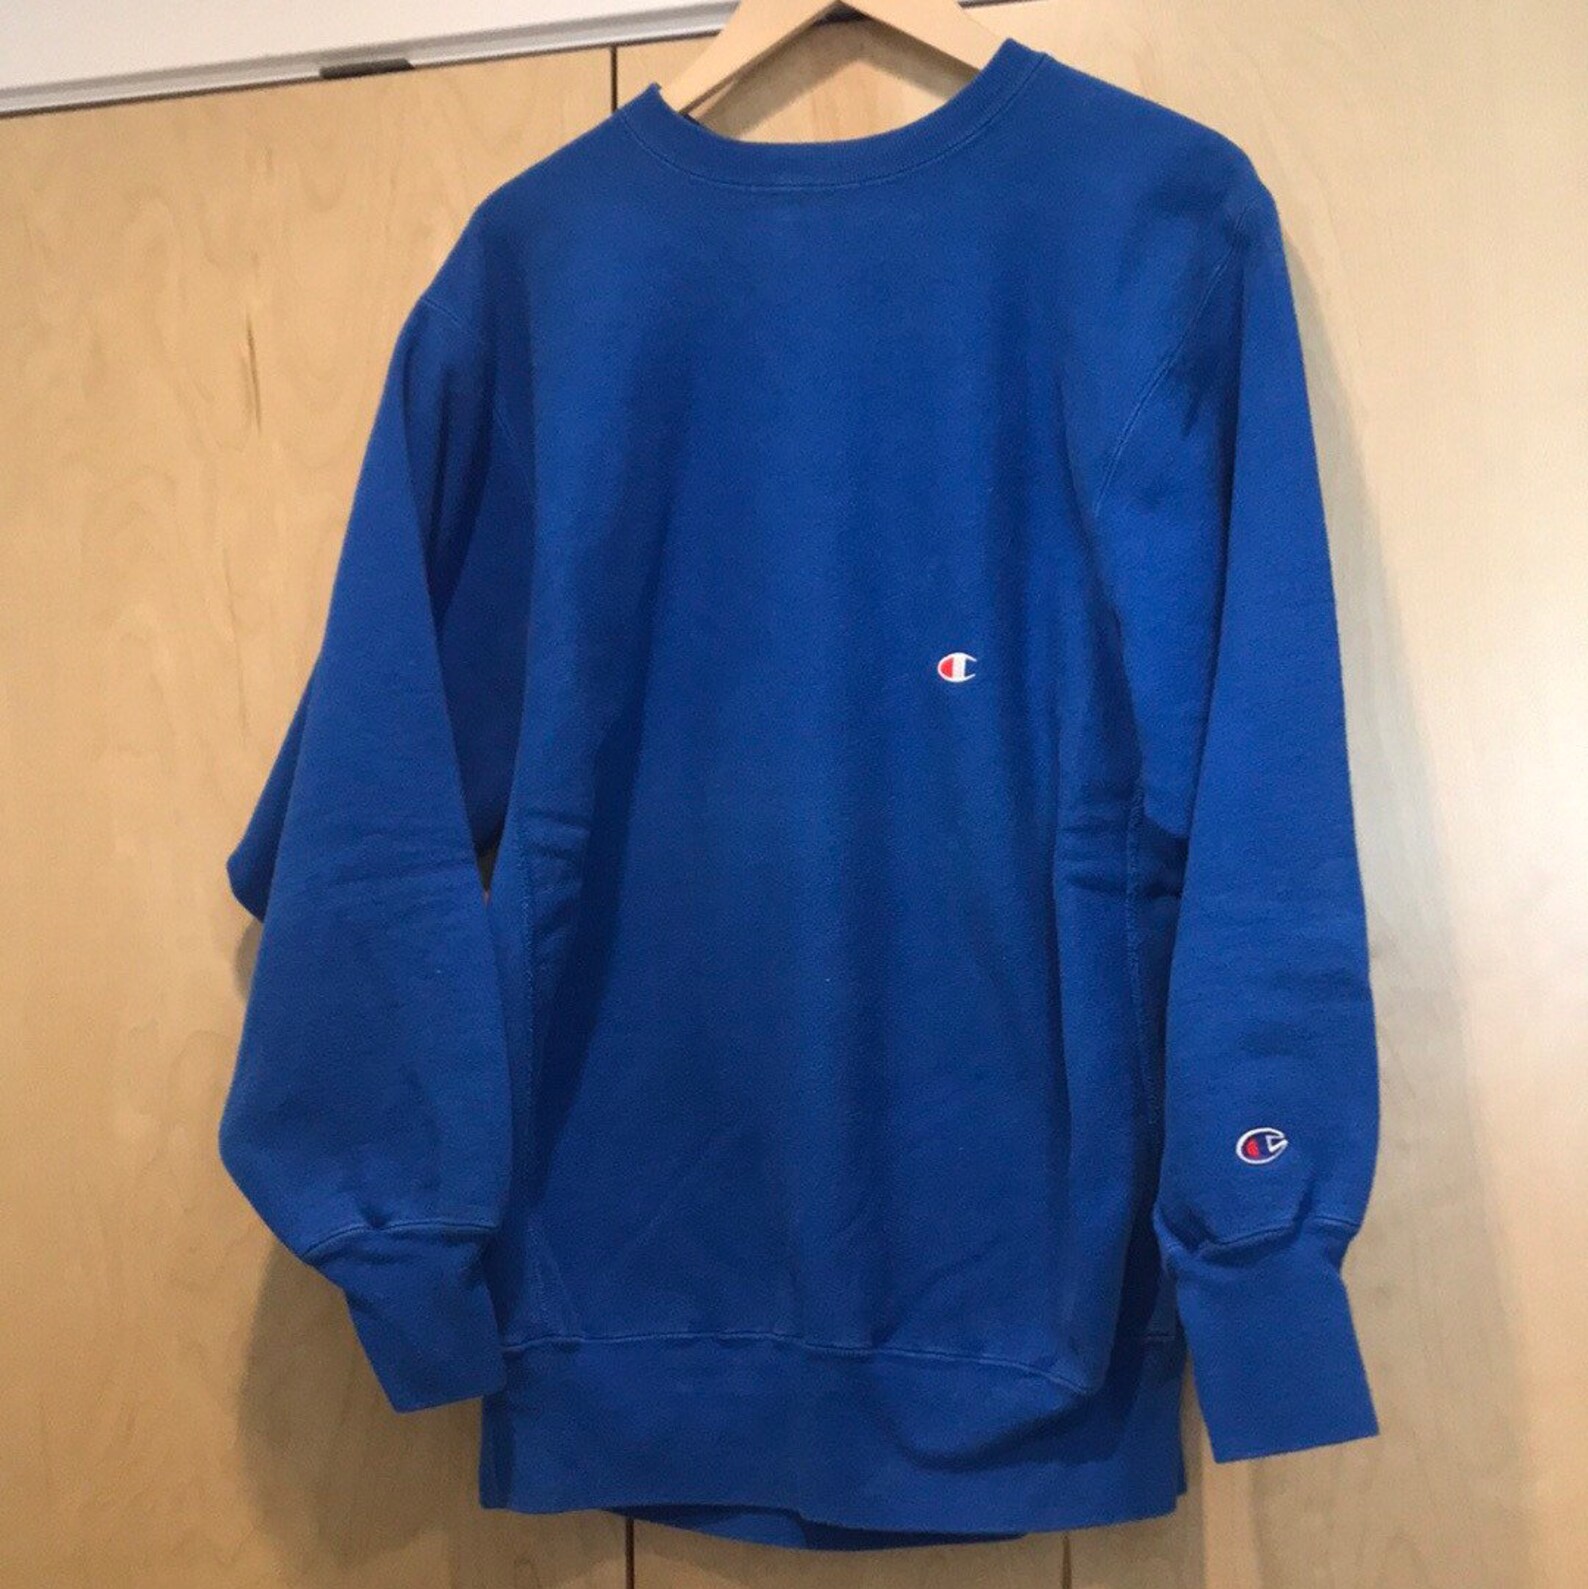 Authentic vintage true blue Champion sweatshirt | Etsy